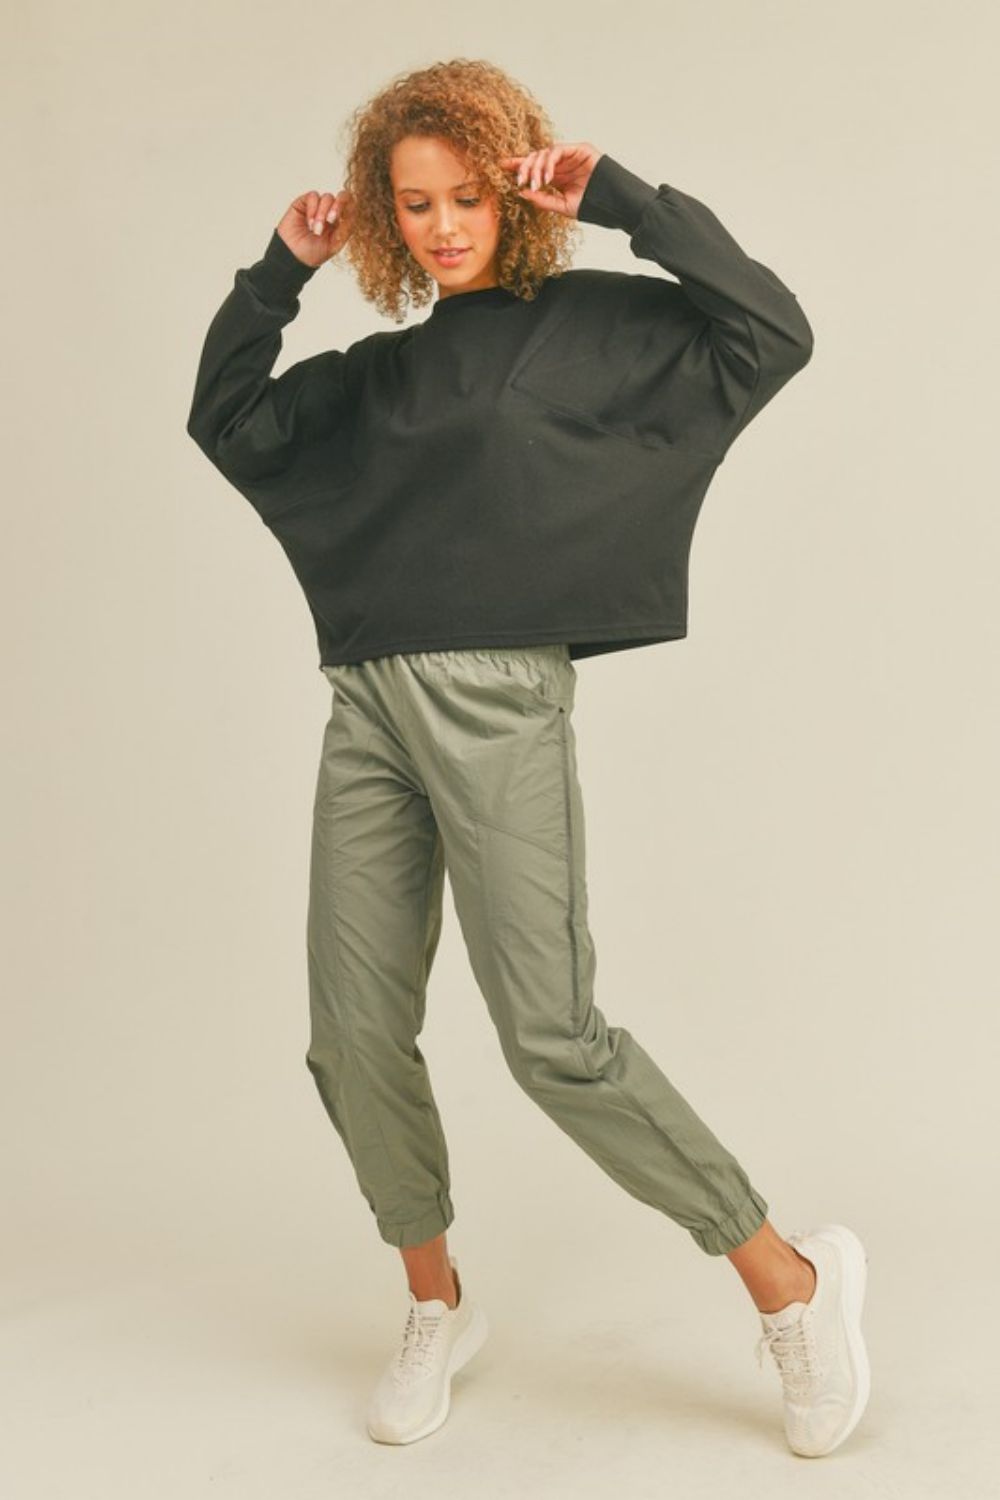 Kimberly C Full Size Dolman Sleeve Sweatshirt in Black | Sweatshirts - CHANELIA